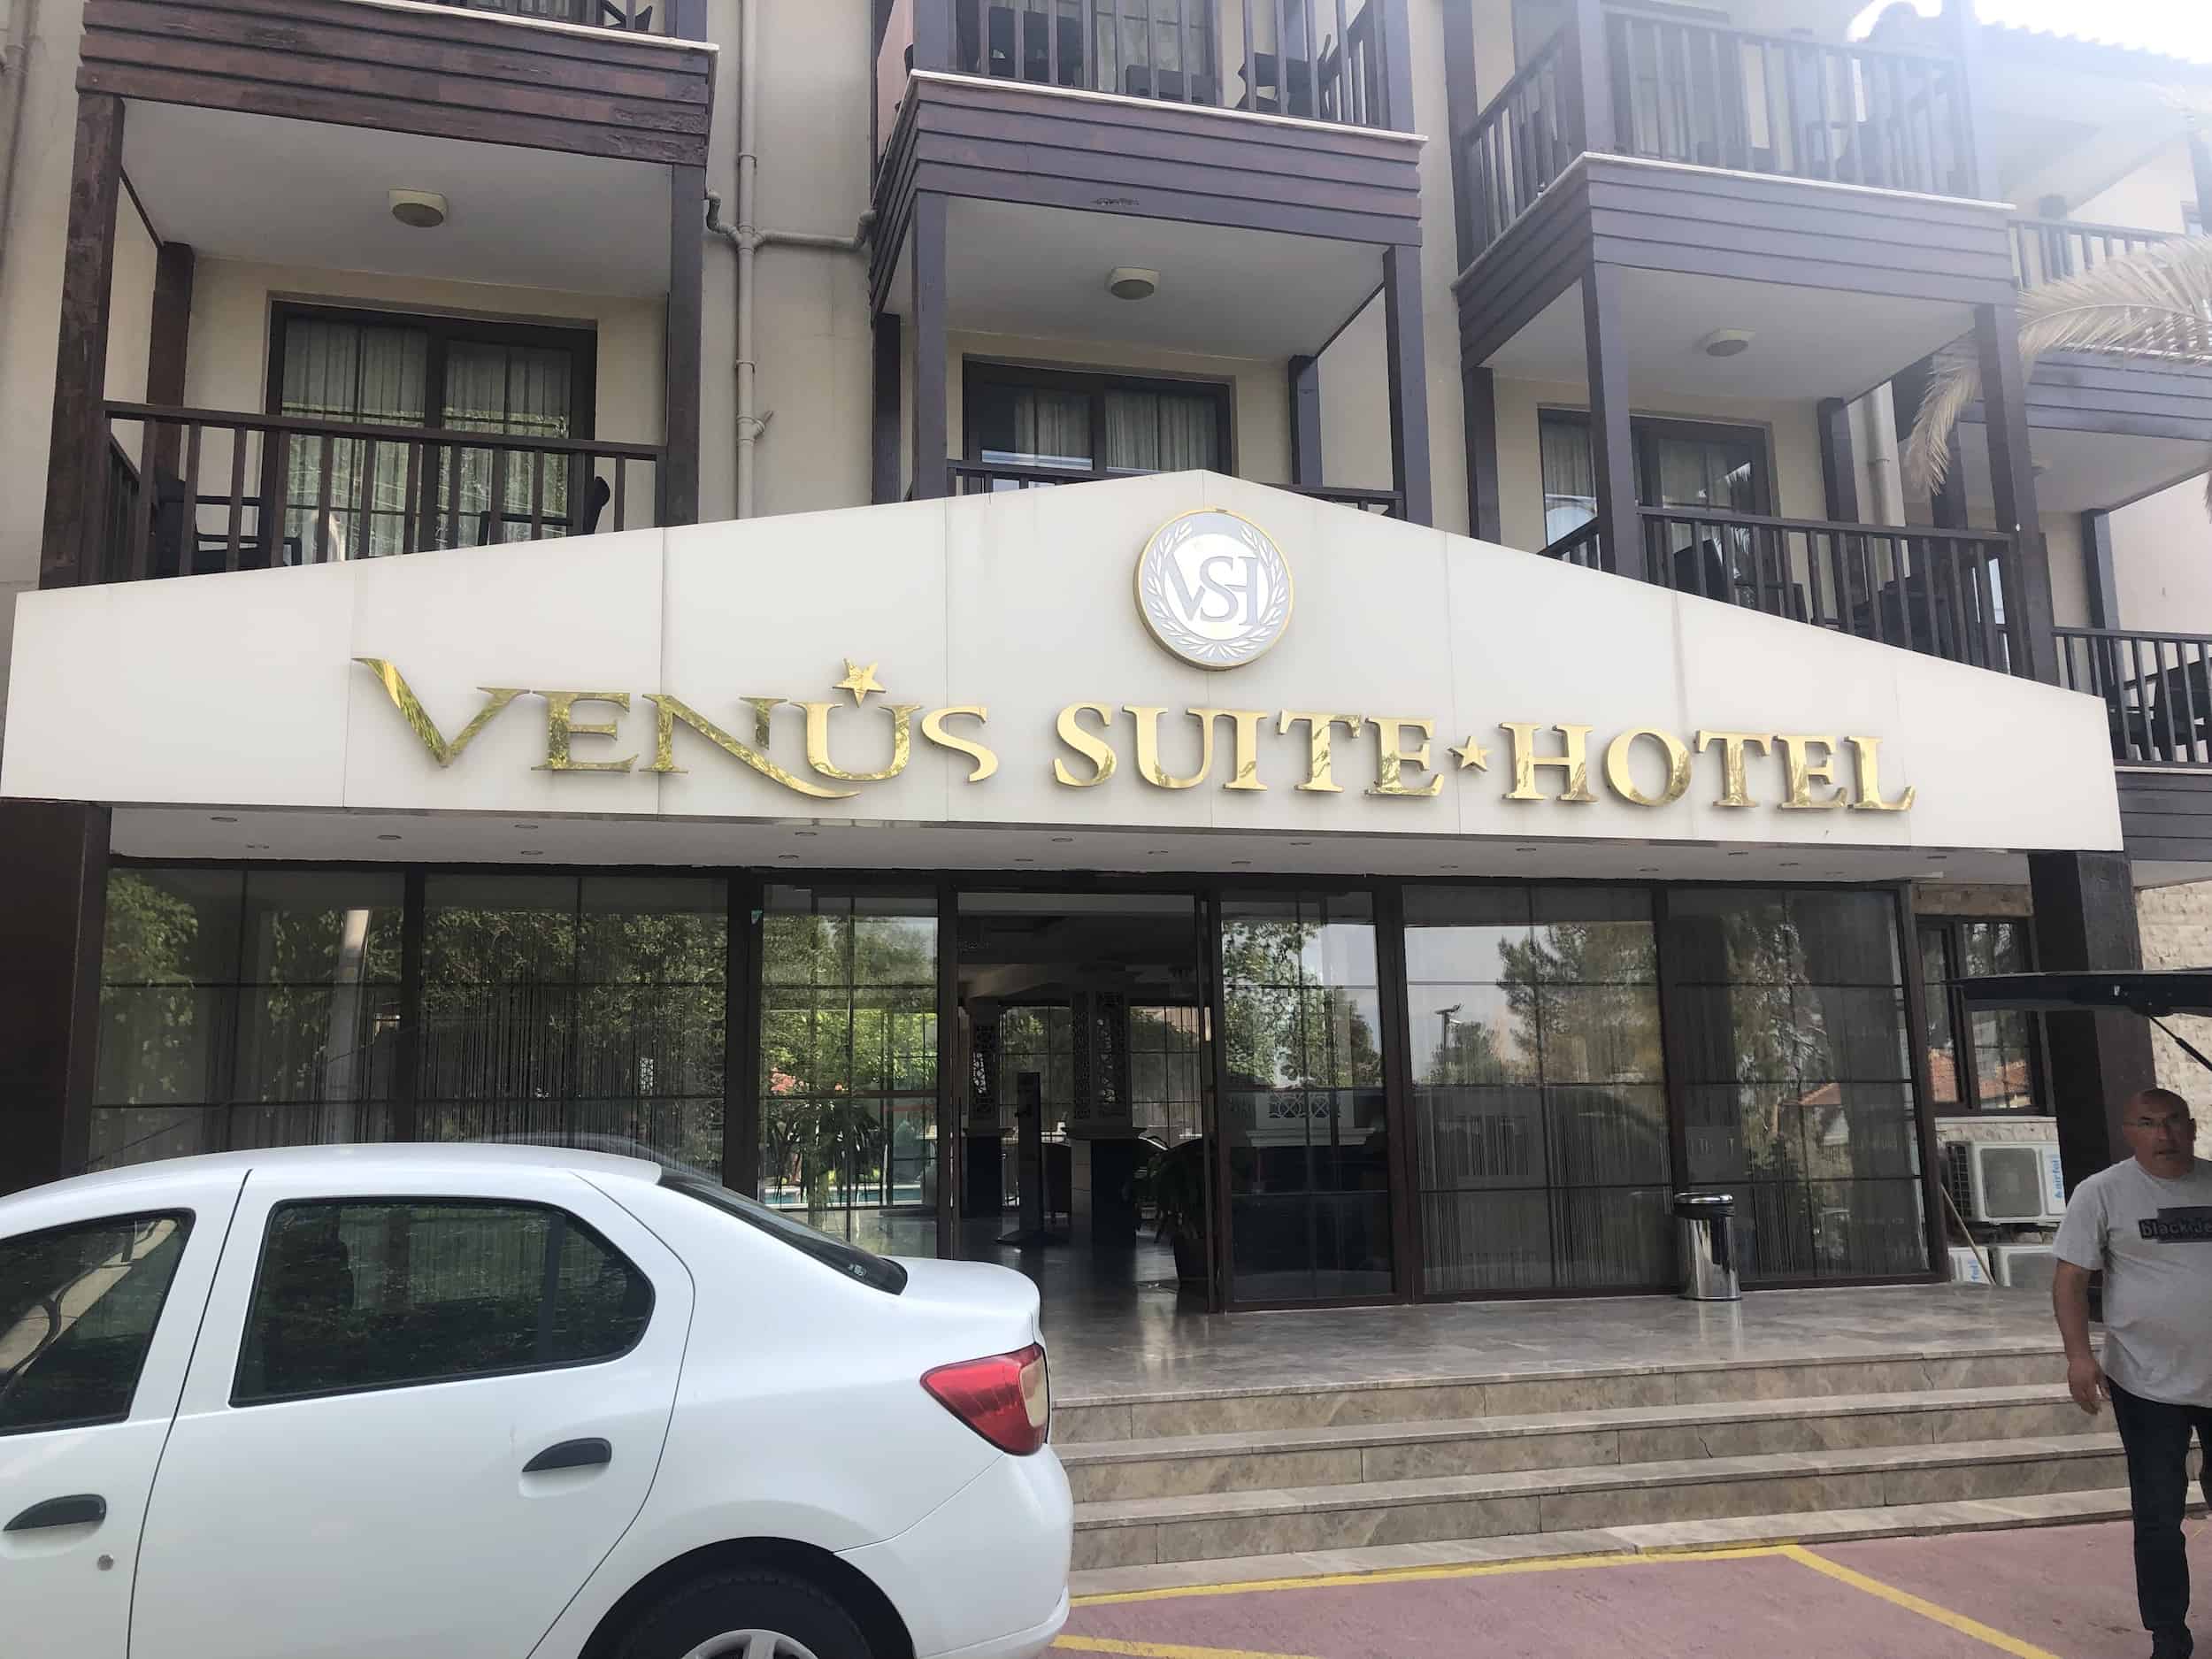 Venus Suite Hotel in Pamukkale, Turkey